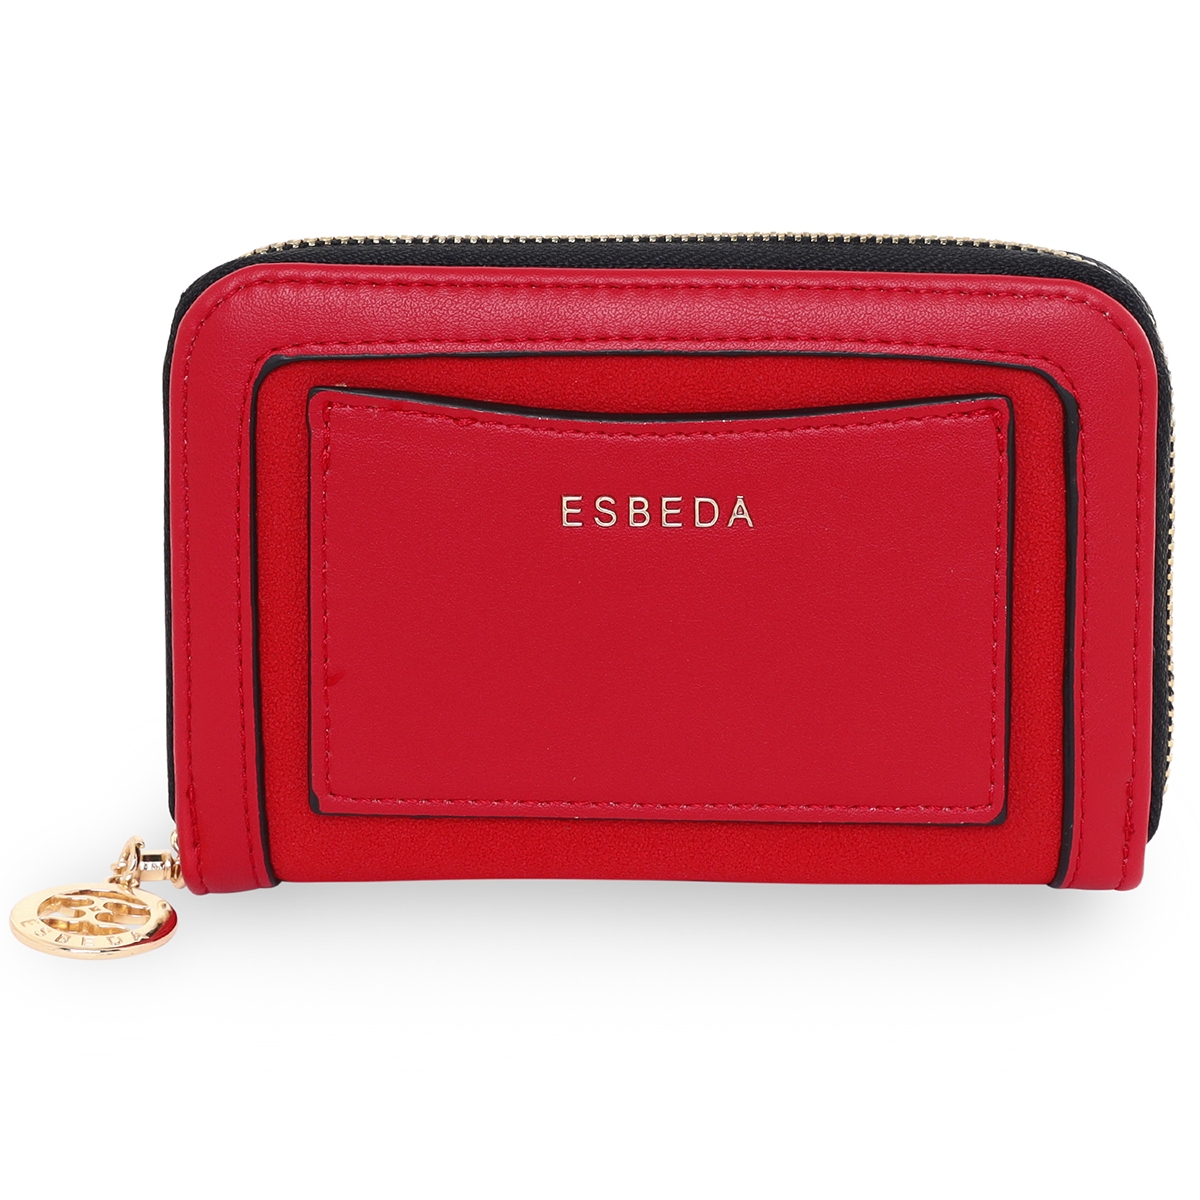 ESBEDA | ESBEDA Red Color Soft Suede Wallet For Women's- Small